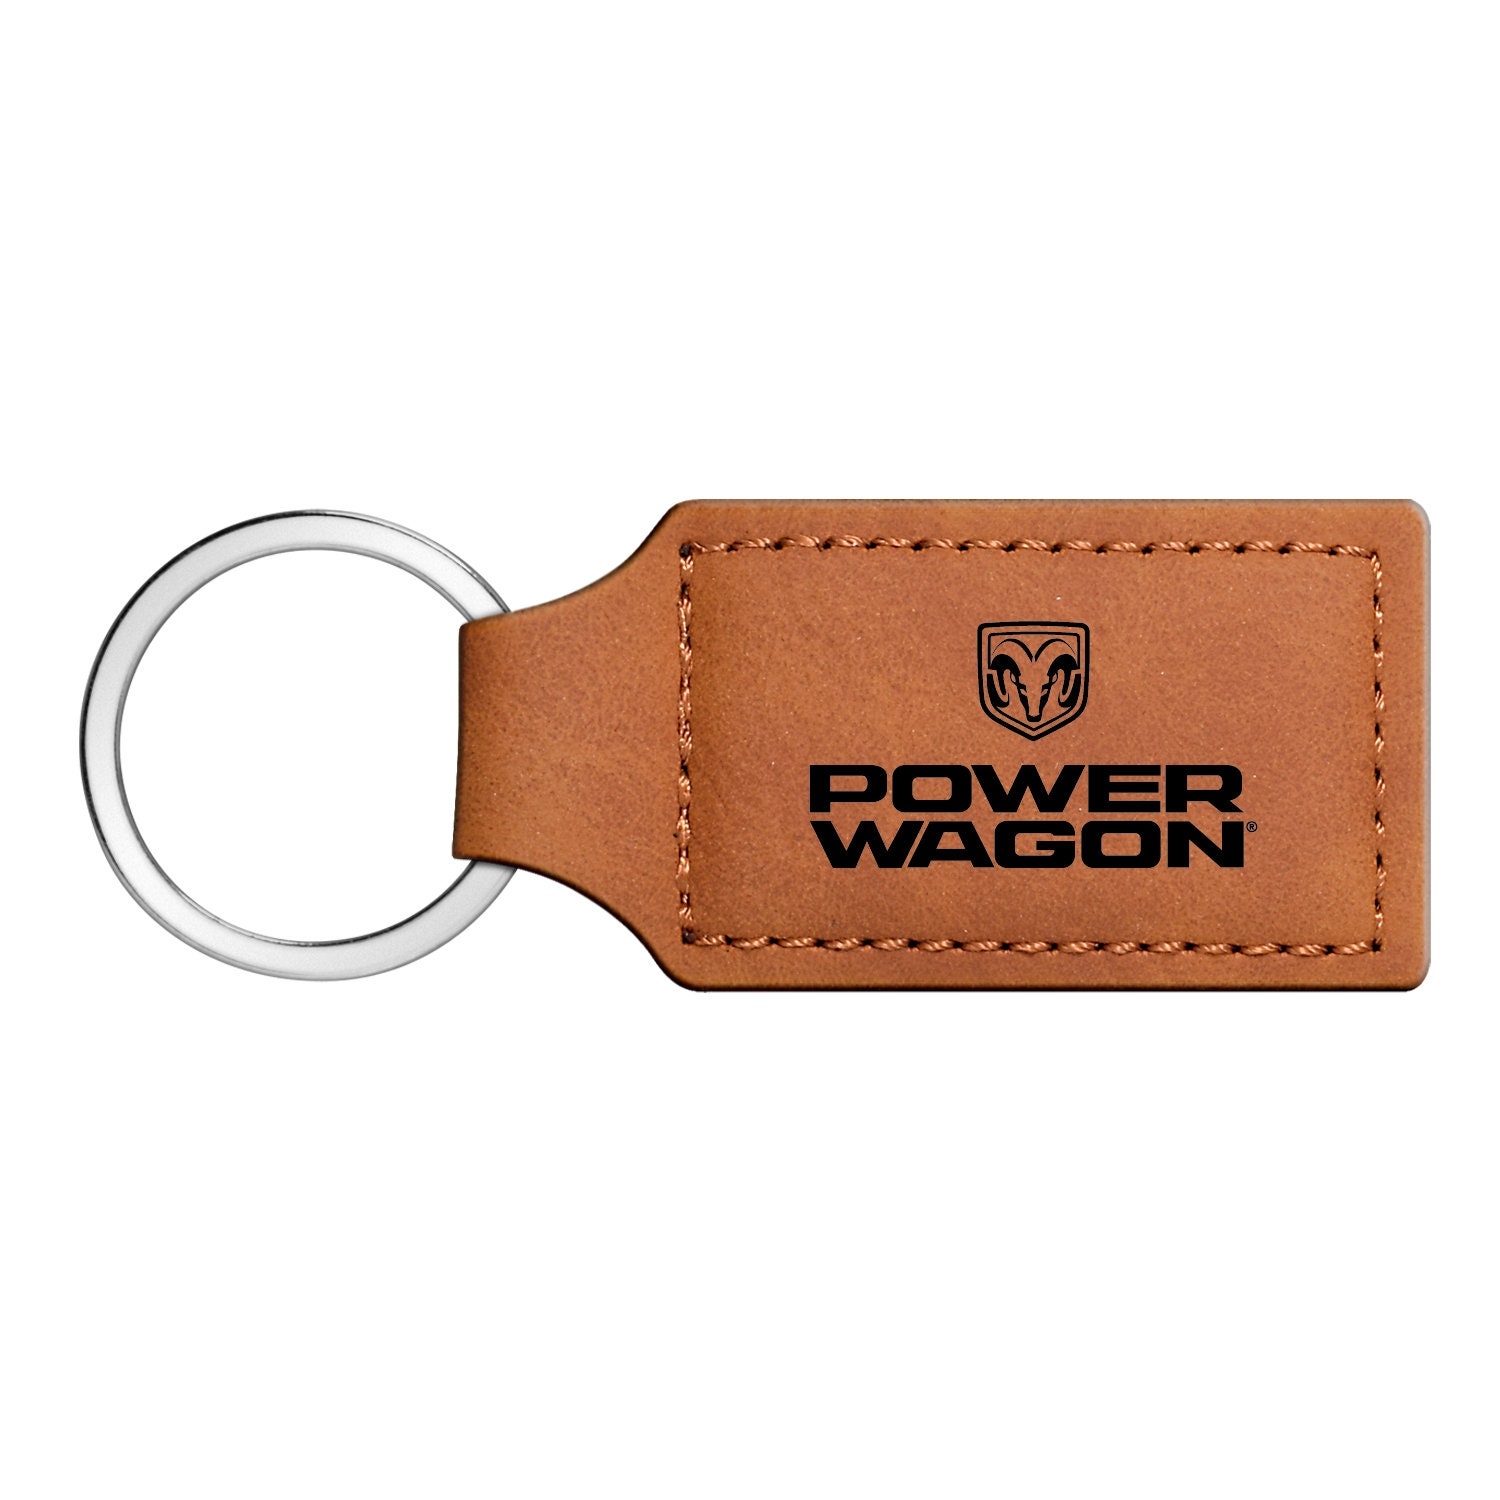 Ram Power Wagon Rectangular Brown Leather Key Chain